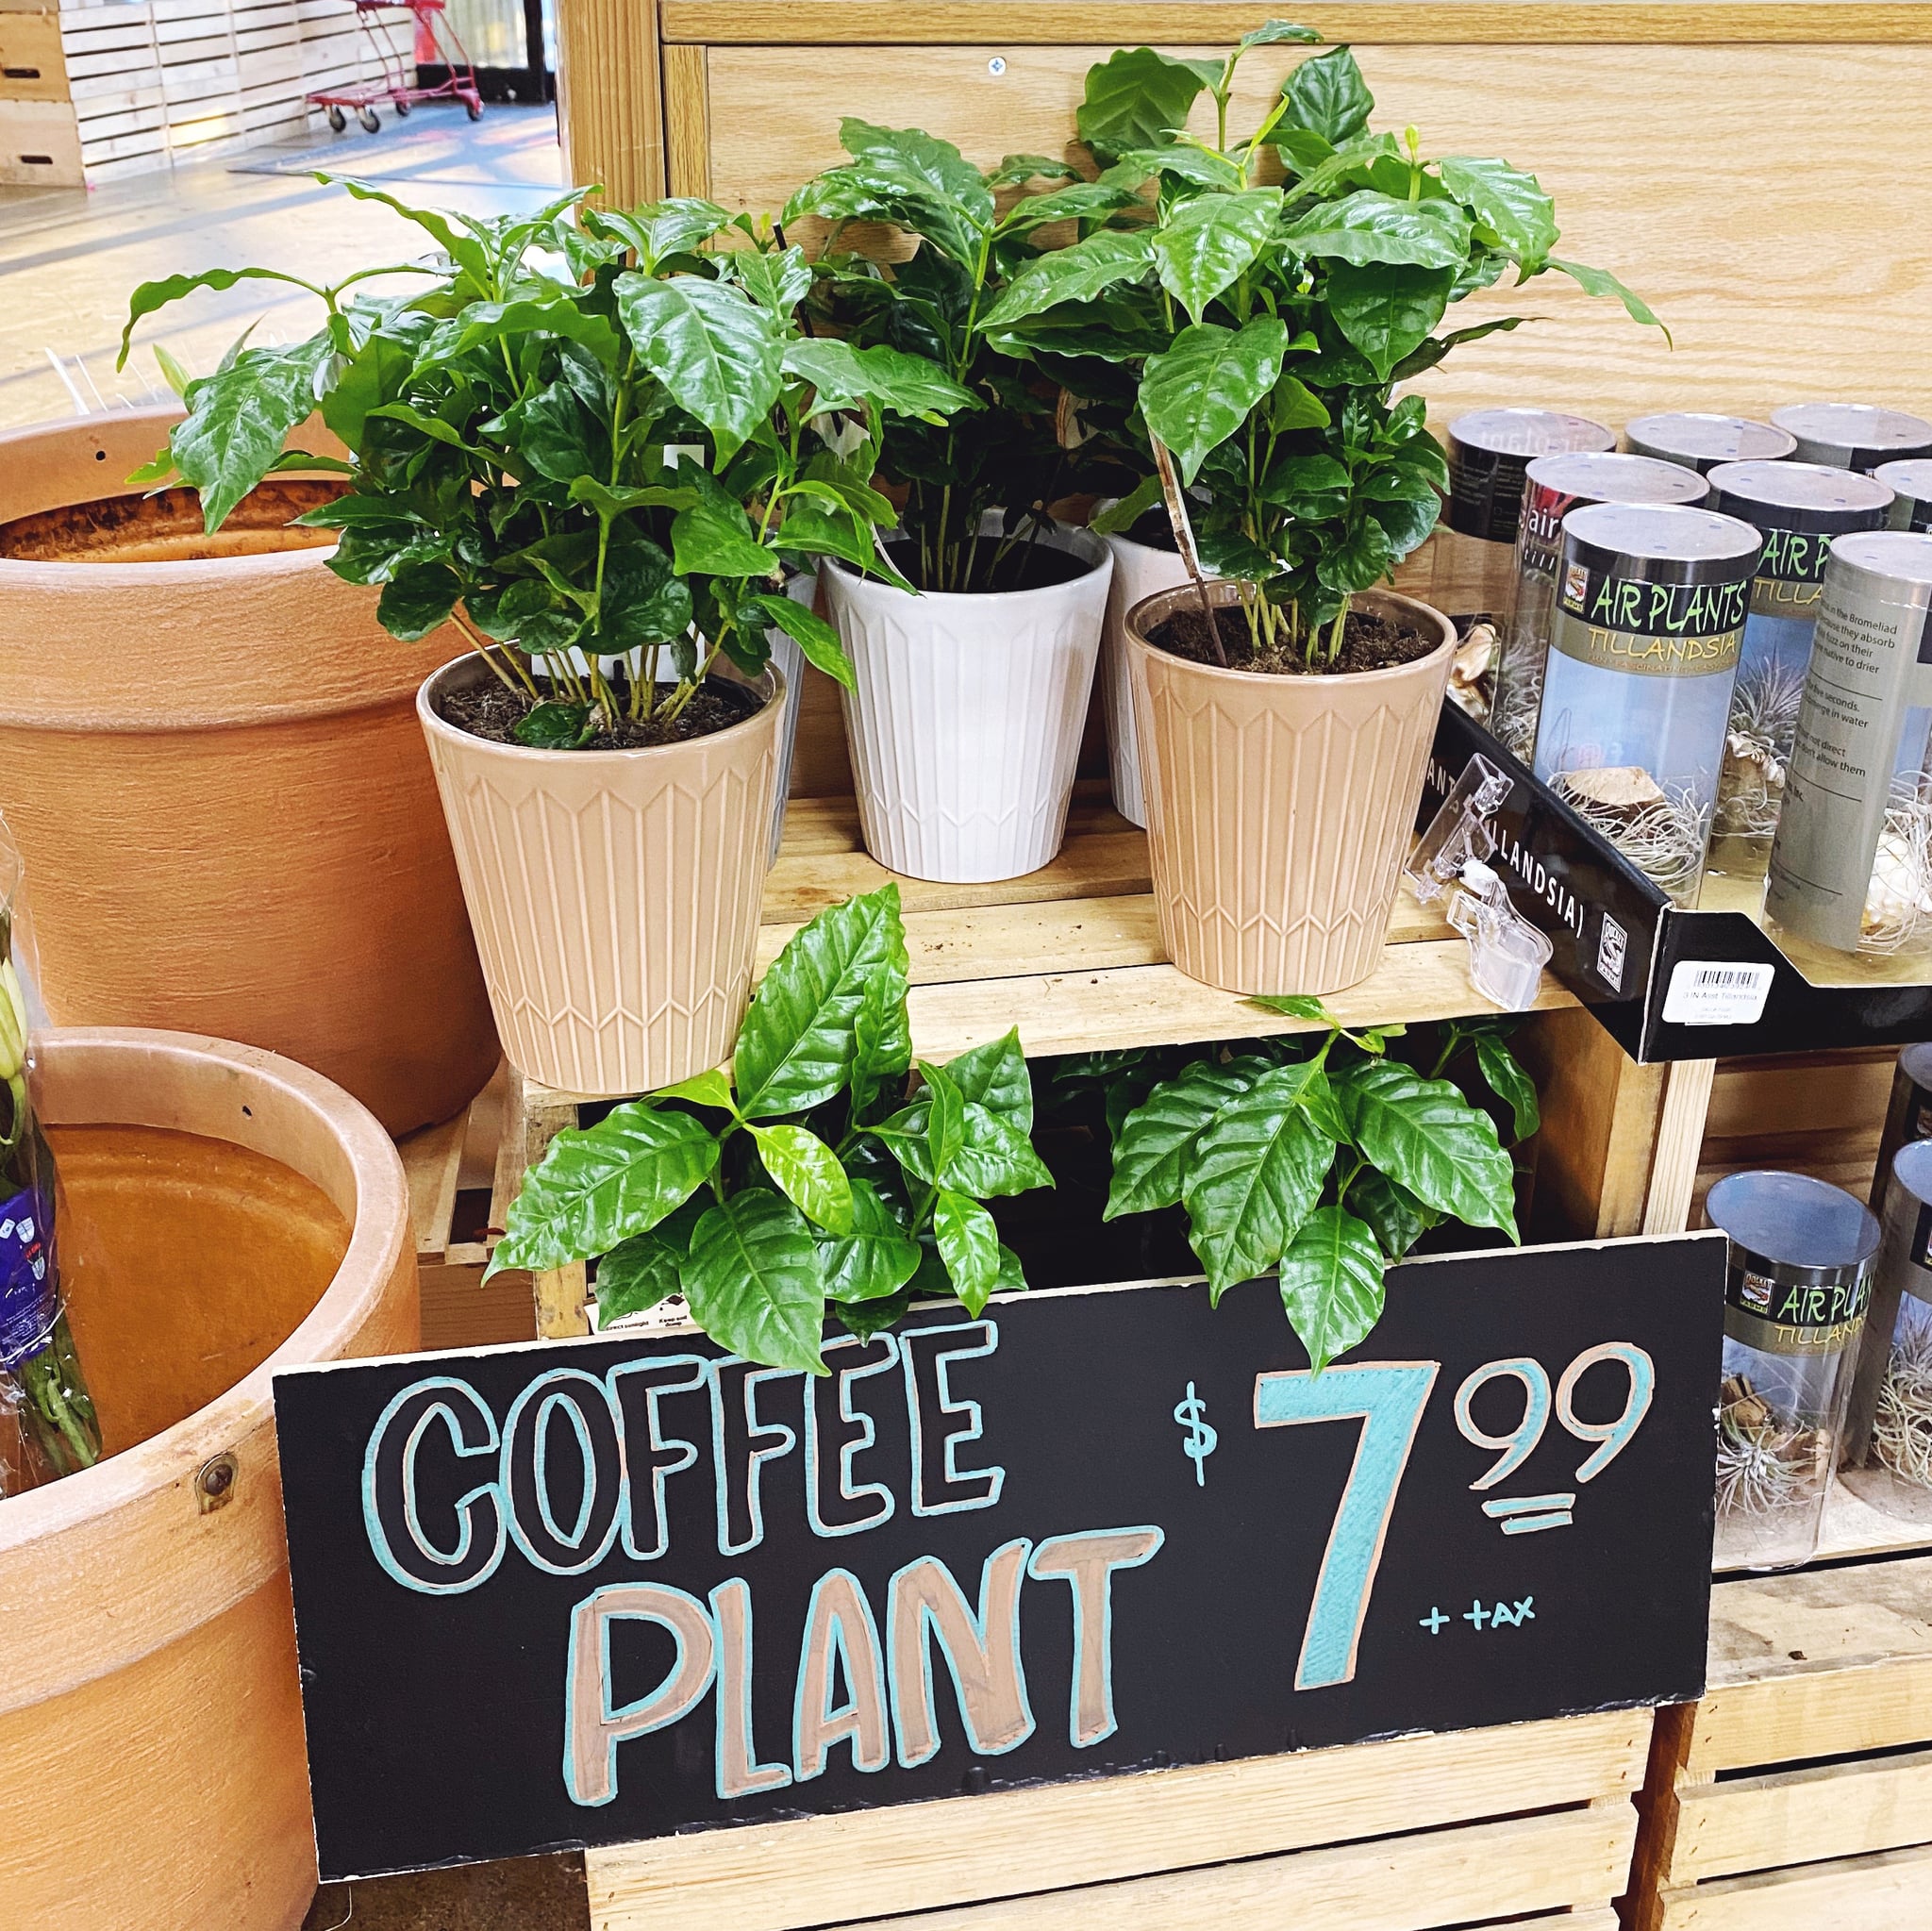 Coffee Plants For Sale at Trader | POPSUGAR Home